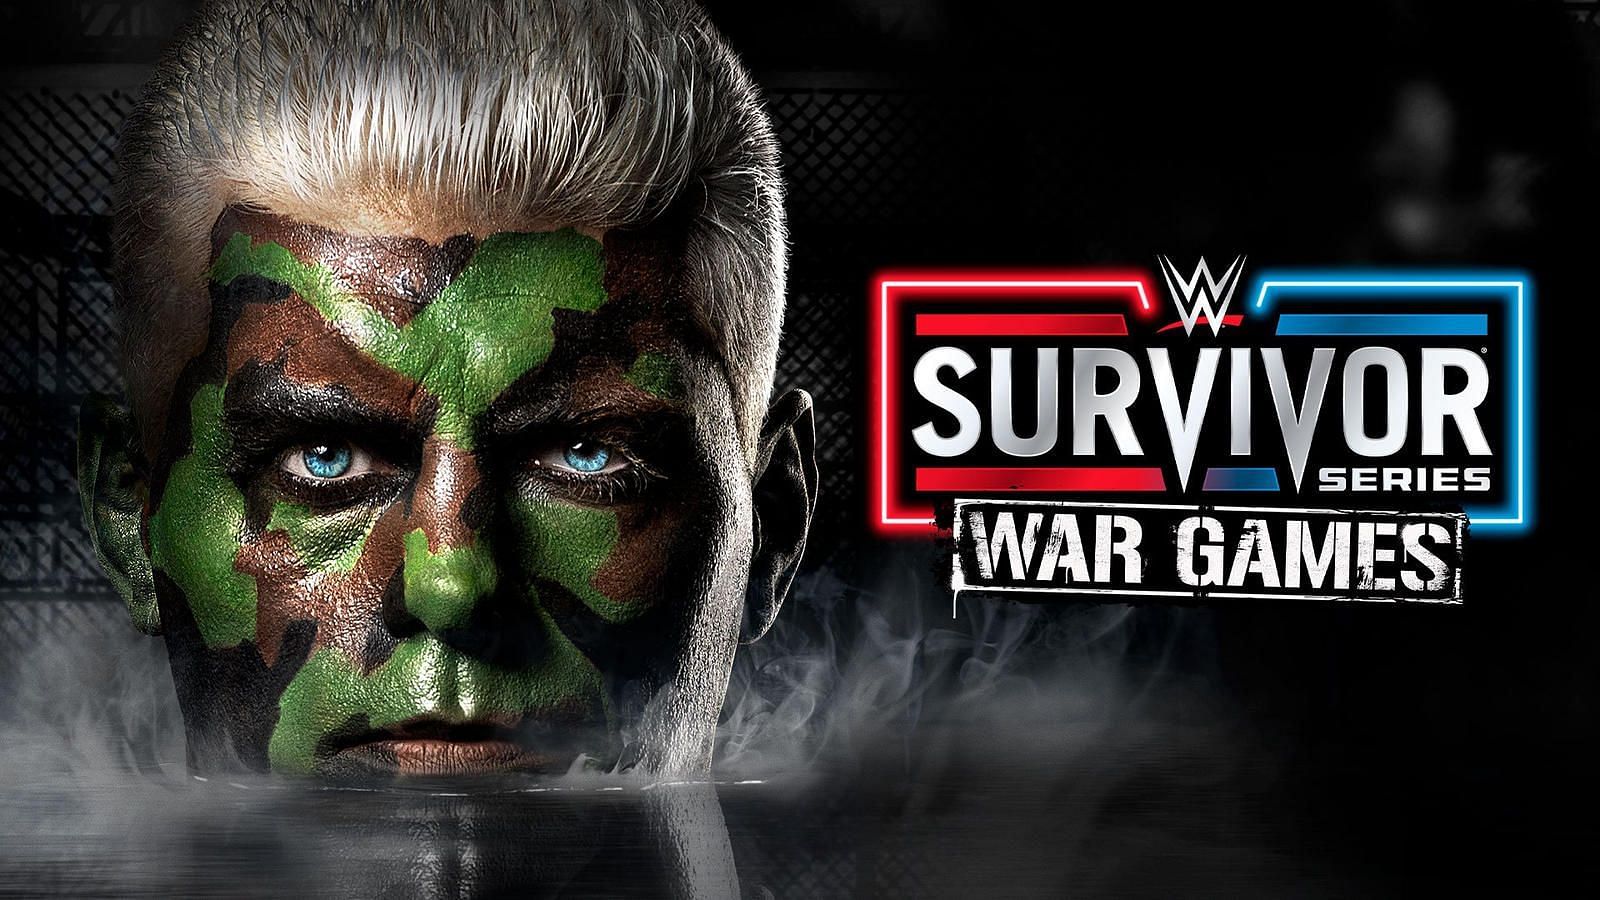 Survivor Series is scheduled for November 25th